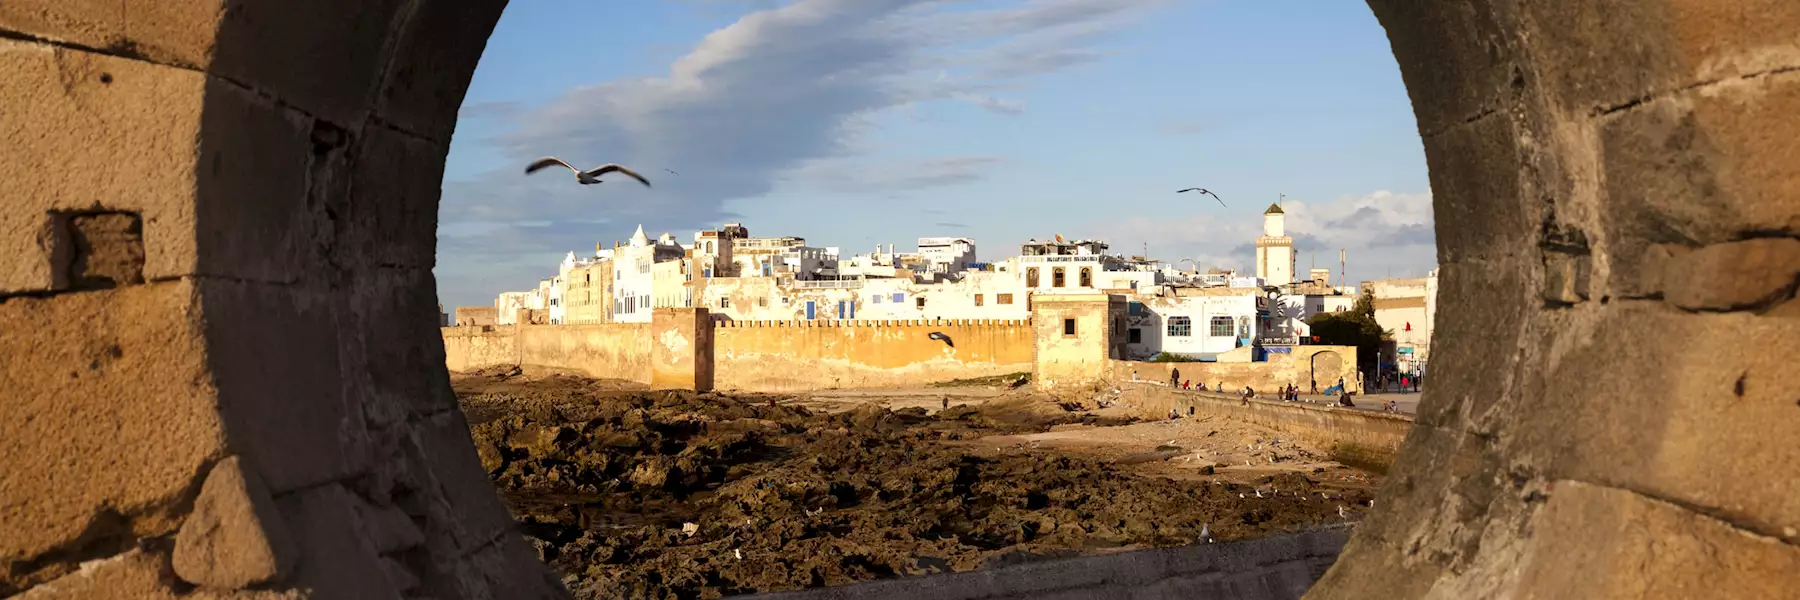 Visit Essaouira, Morocco